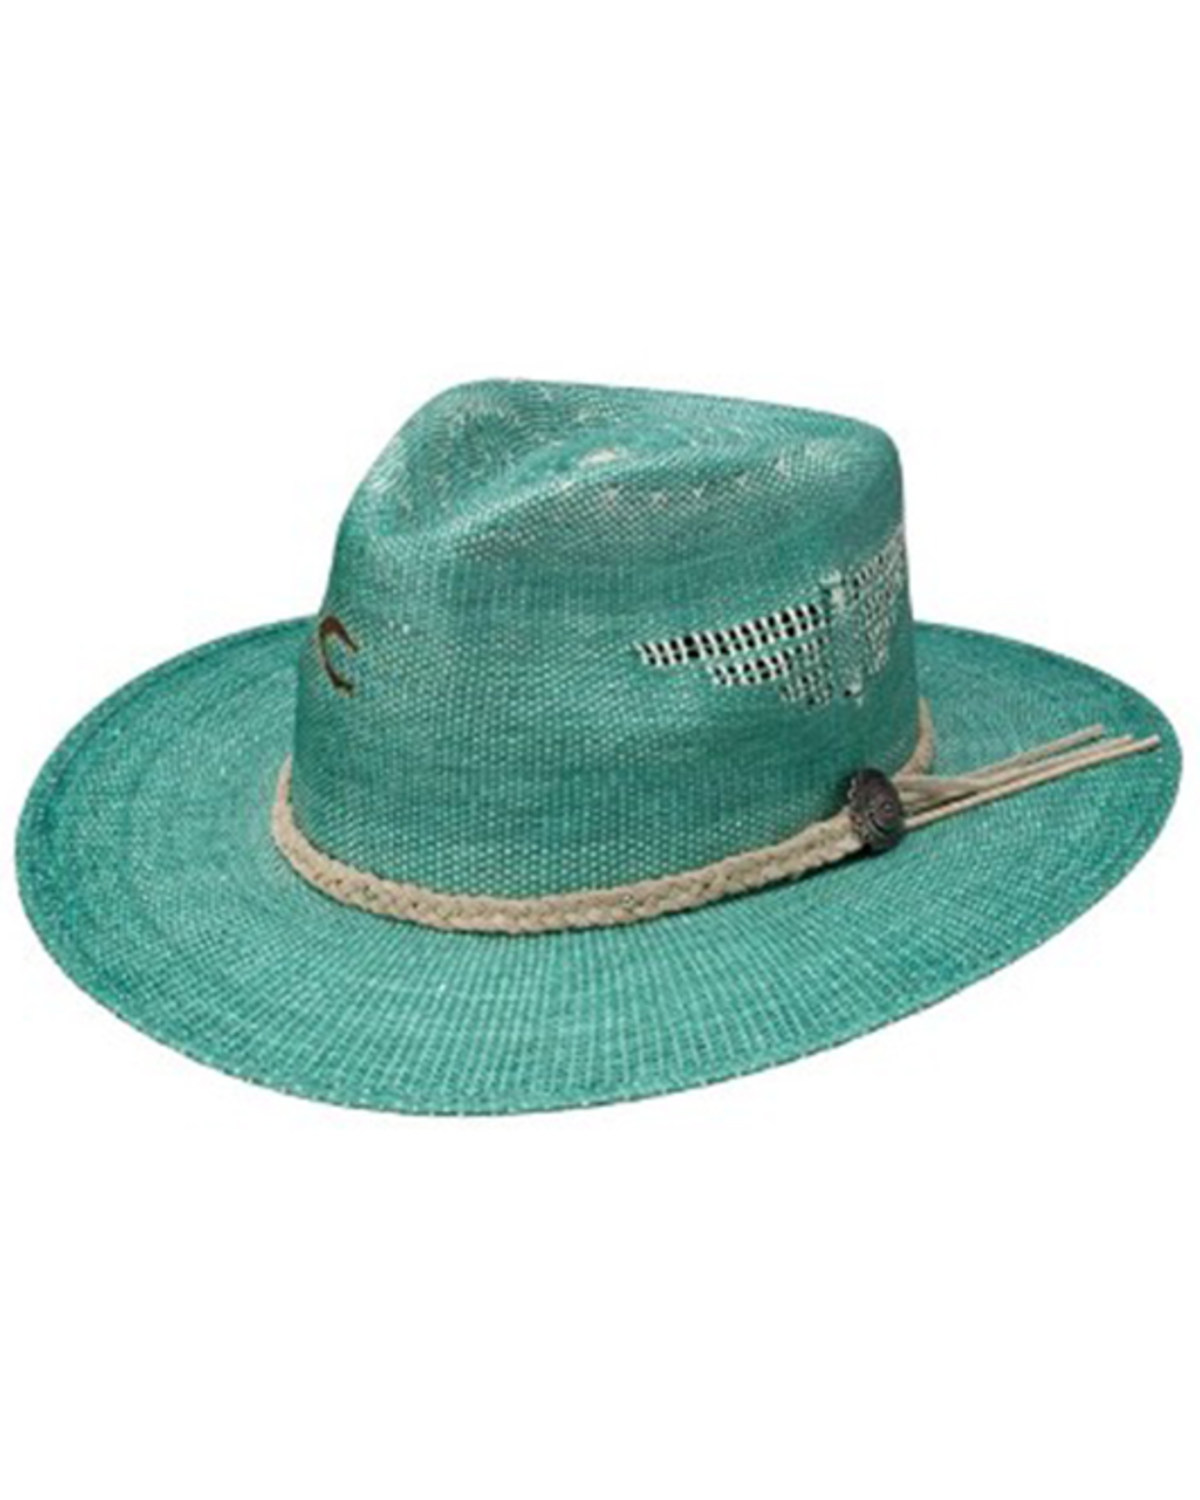 Resistol Women's Topo Chico Straw Western Fashion Hat